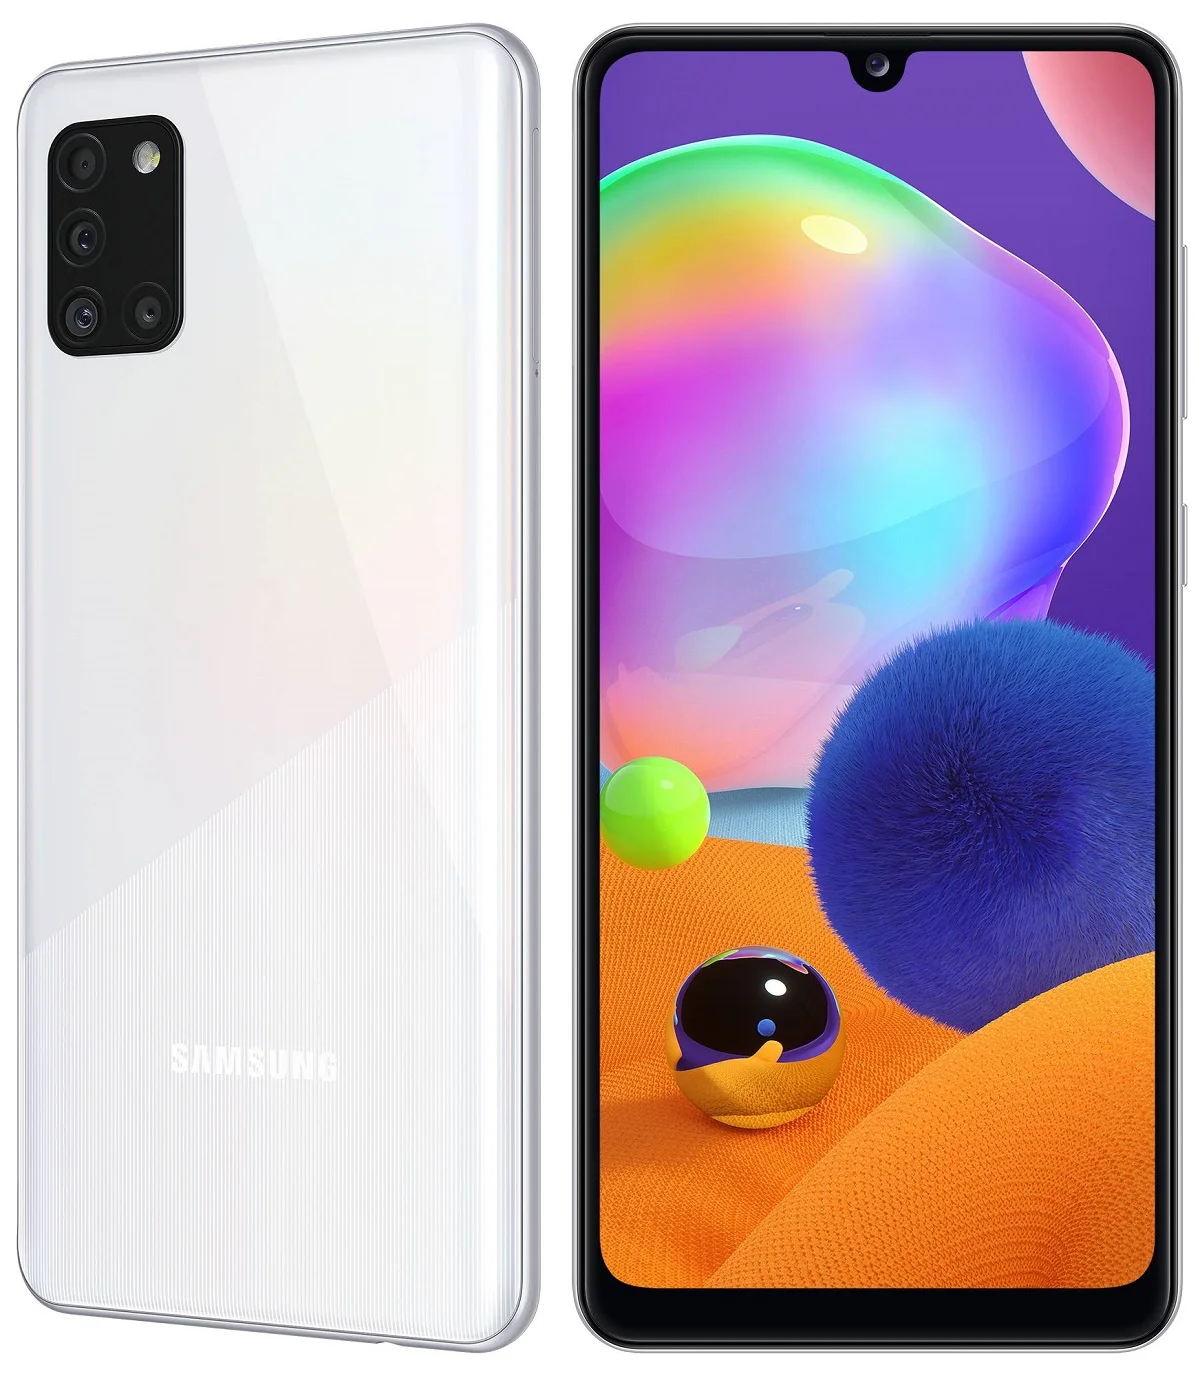 Samsung анонсировала бюджетную новинку Galaxy A31 с батареей на 5000 мАч - фото 1